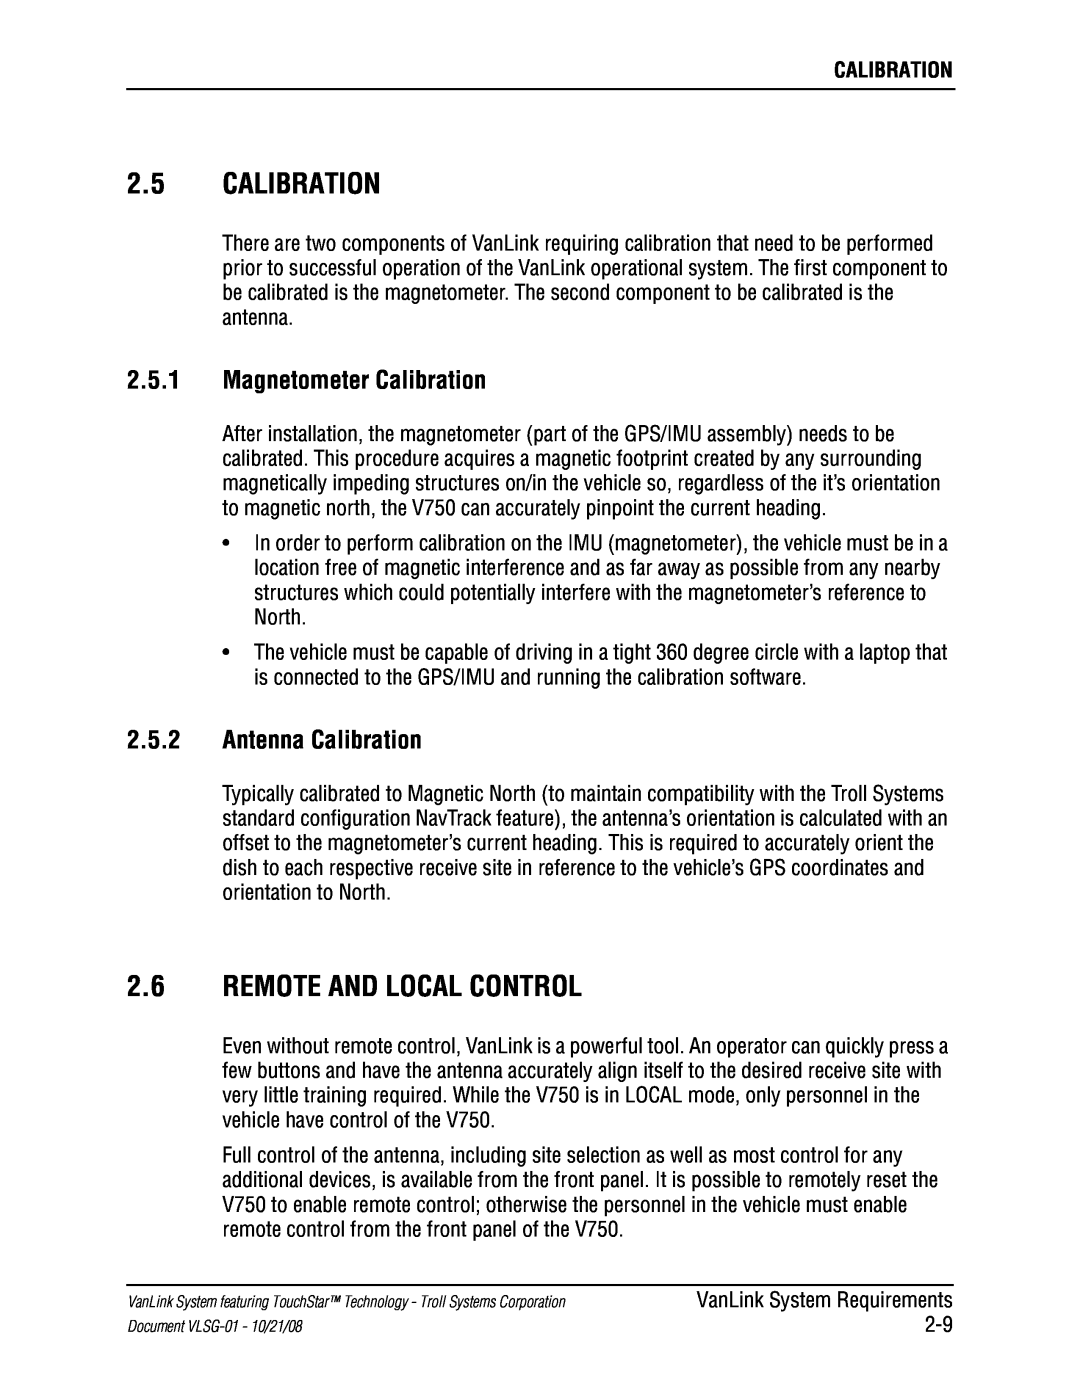 Kyocera VLSG-01 manual 2.5CALIBRATION, 2.6REMOTE AND LOCAL CONTROL, 2.5.1Magnetometer Calibration, 2.5.2Antenna Calibration 